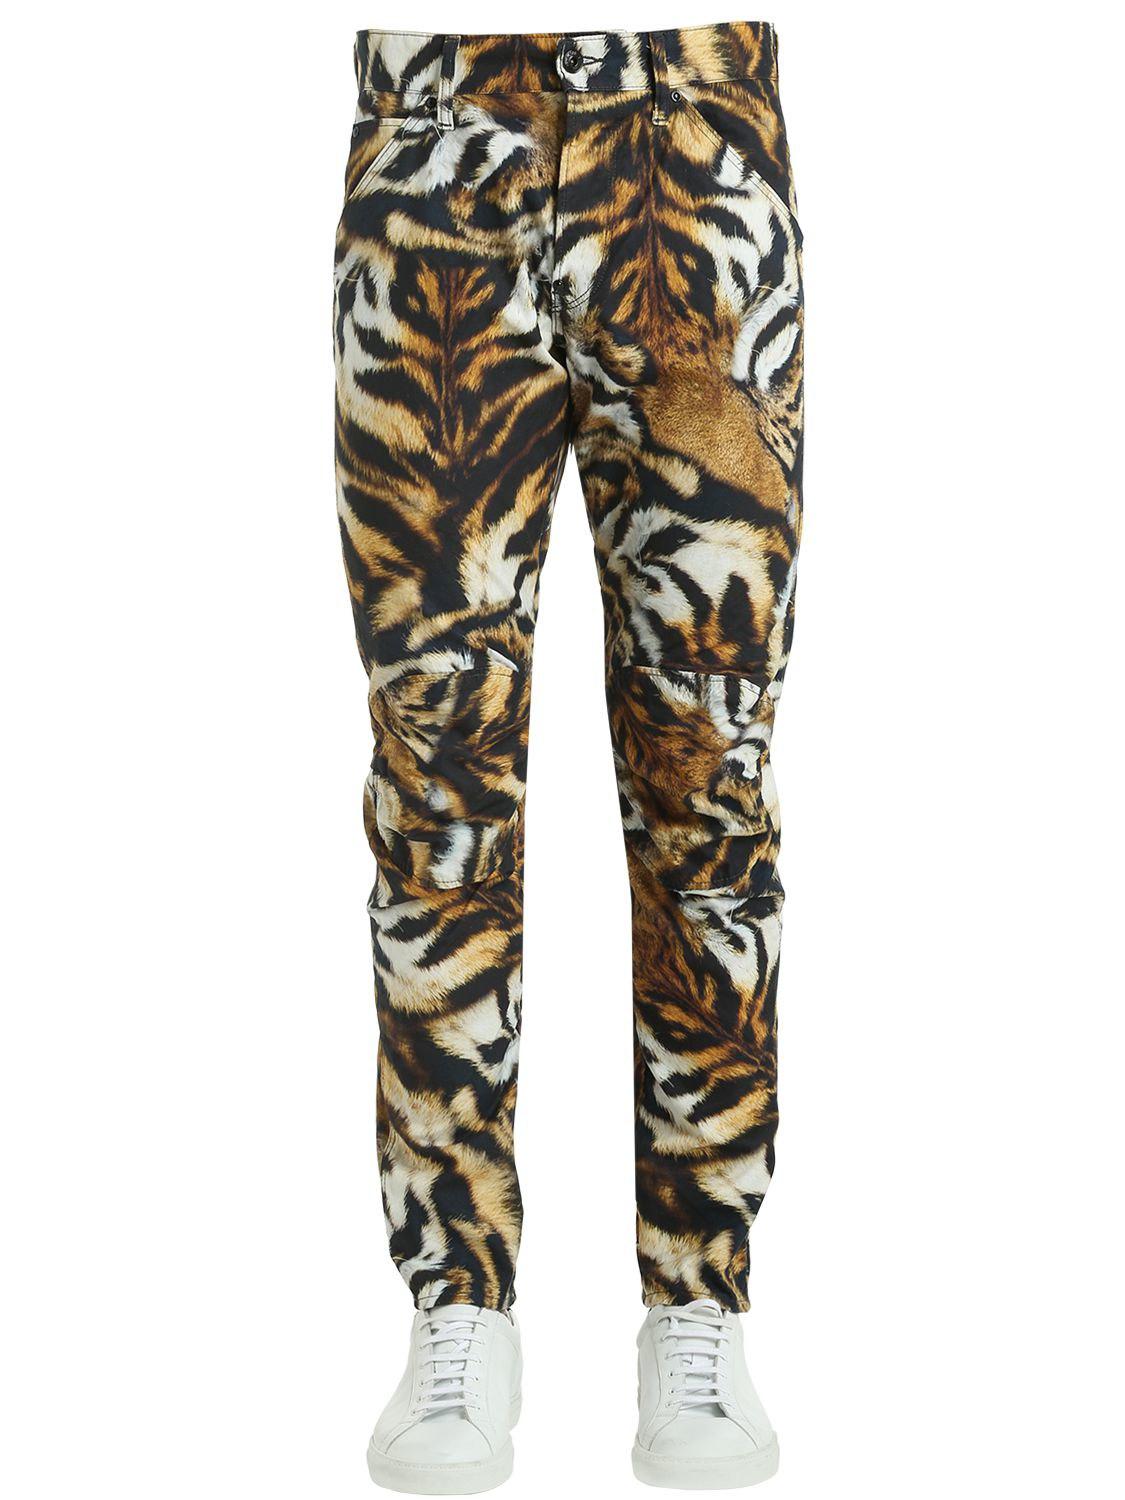 G-Star RAW Elwood Tiger Print Denim Jeans for Men | Lyst